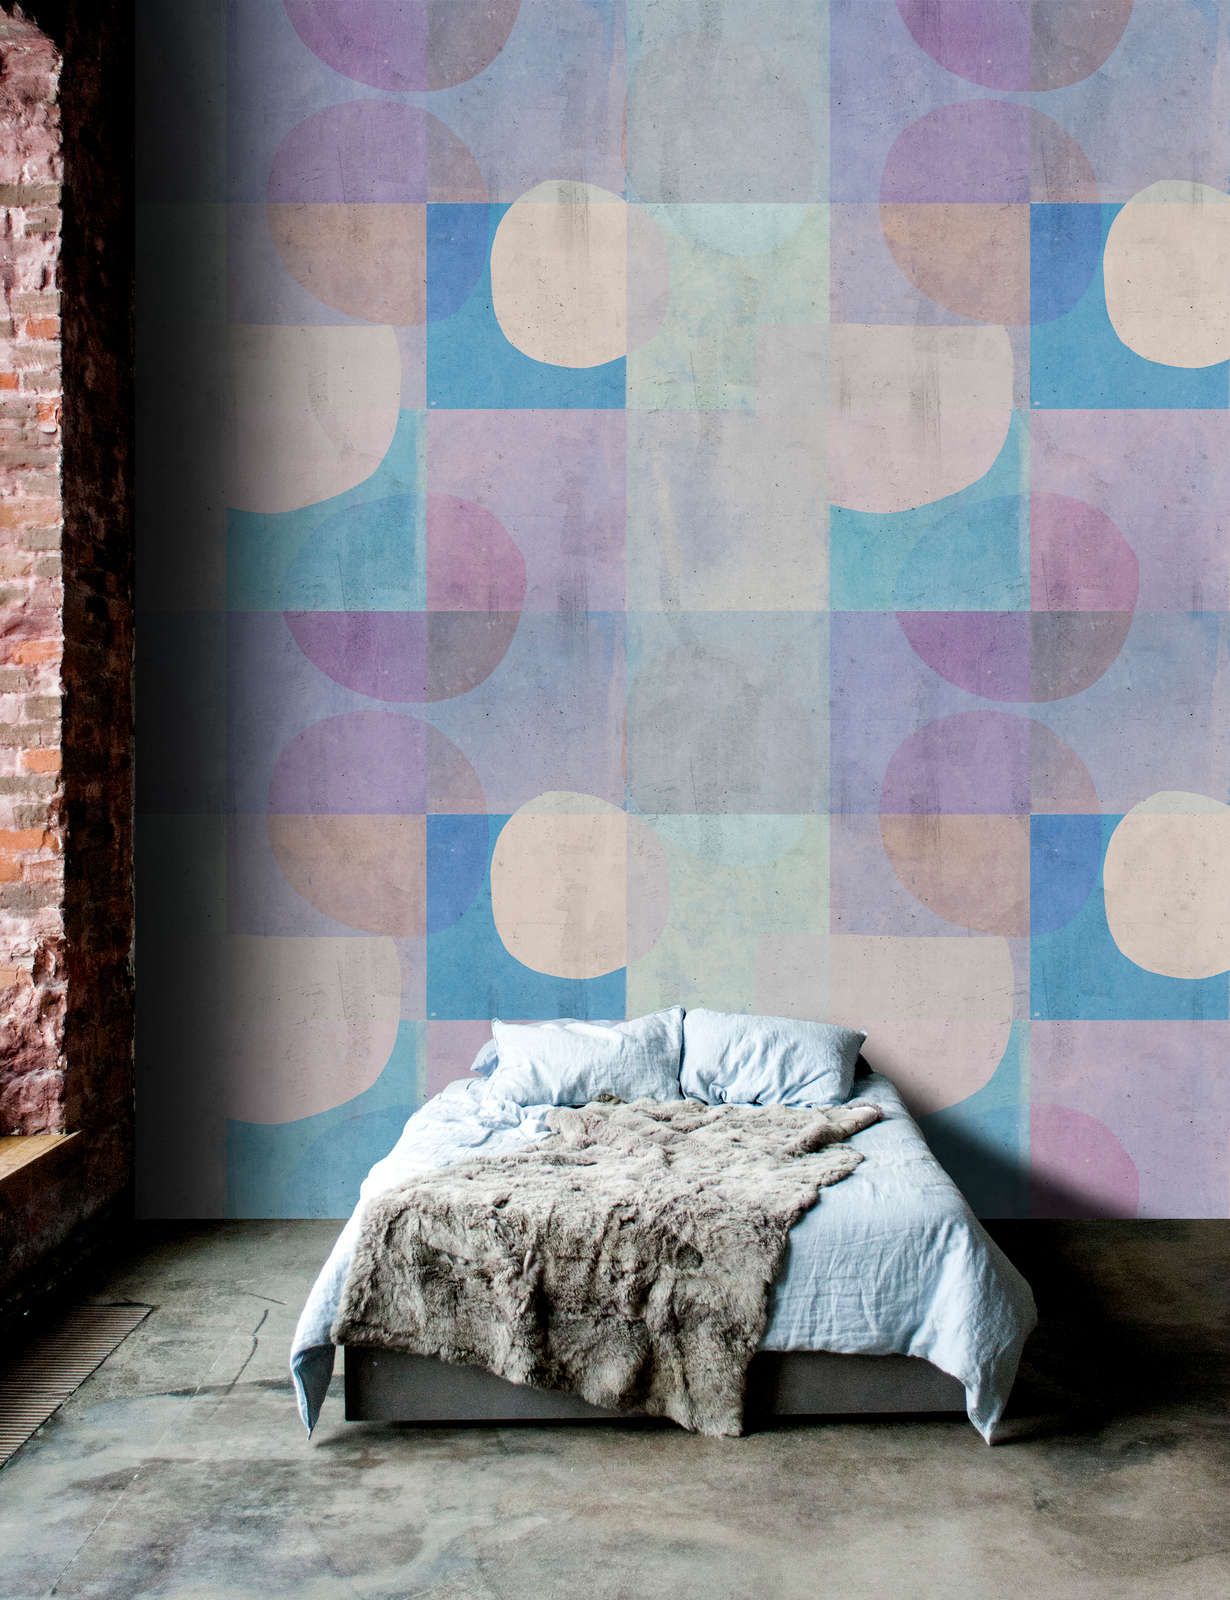             Photo wallpaper »elija 2« - retro pattern in concrete look - blue, purple | Smooth, slightly shiny premium non-woven fabric
        